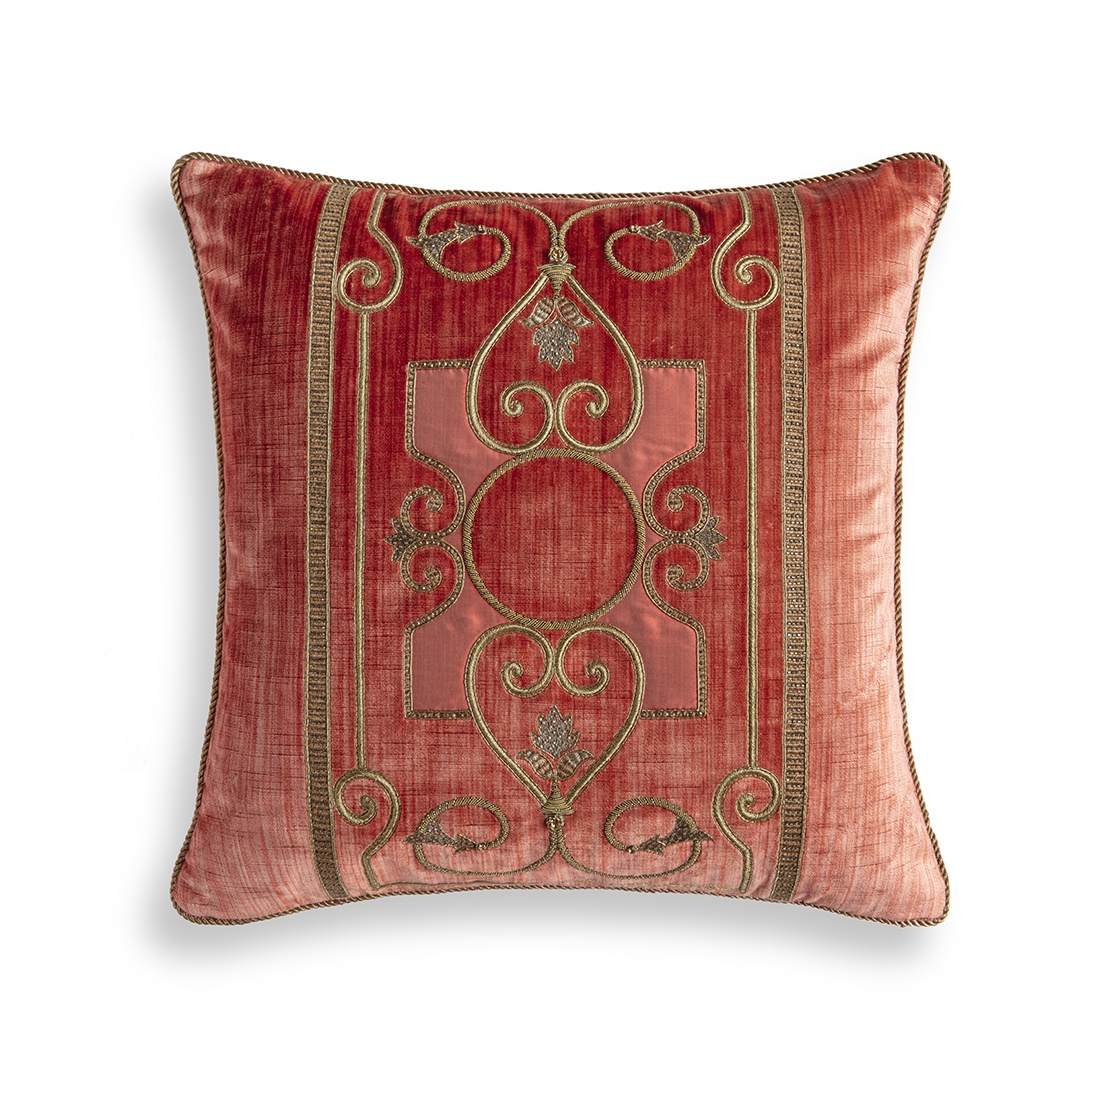 Cordoba cushion in Como silk velvet - Pompeiian Red